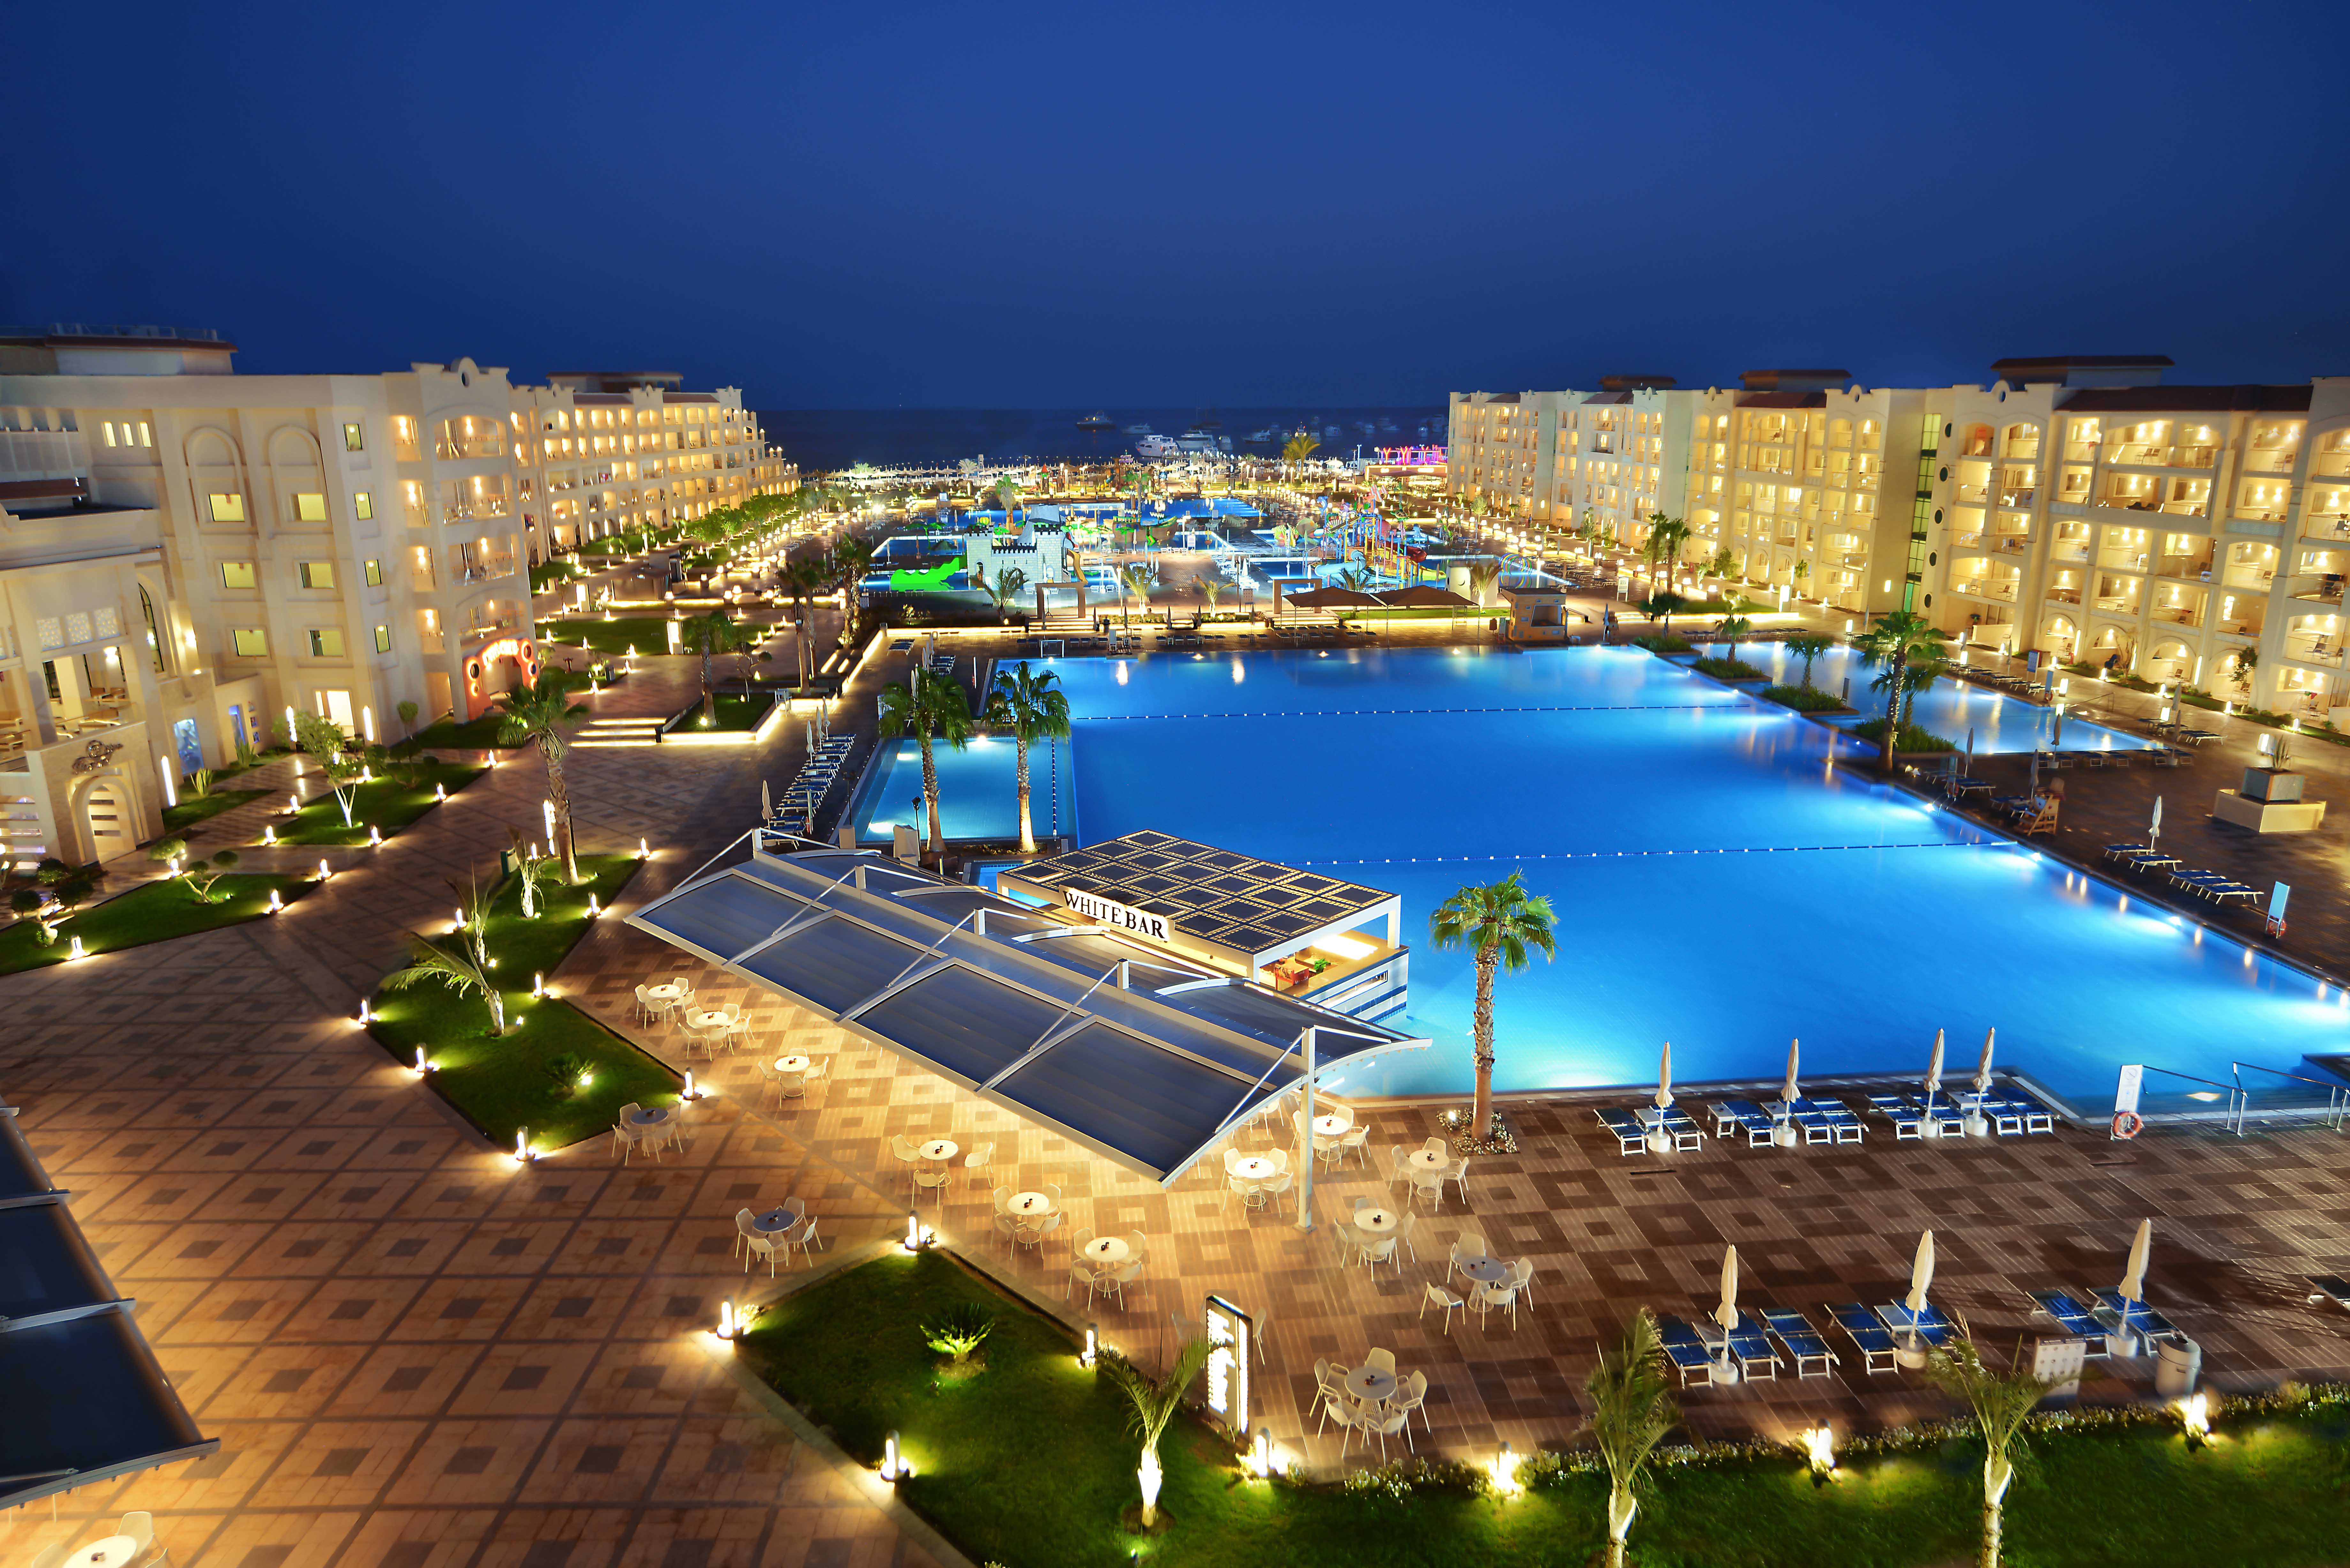 Luxury resort египет хургада. Альбатрос White Beach Хургада. Beach Albatros Resort Hurghada 5 Хургада. Отель Альбатрос Вайт Бич Резорт 5 Хургада. Египет отель Beach Albatros.